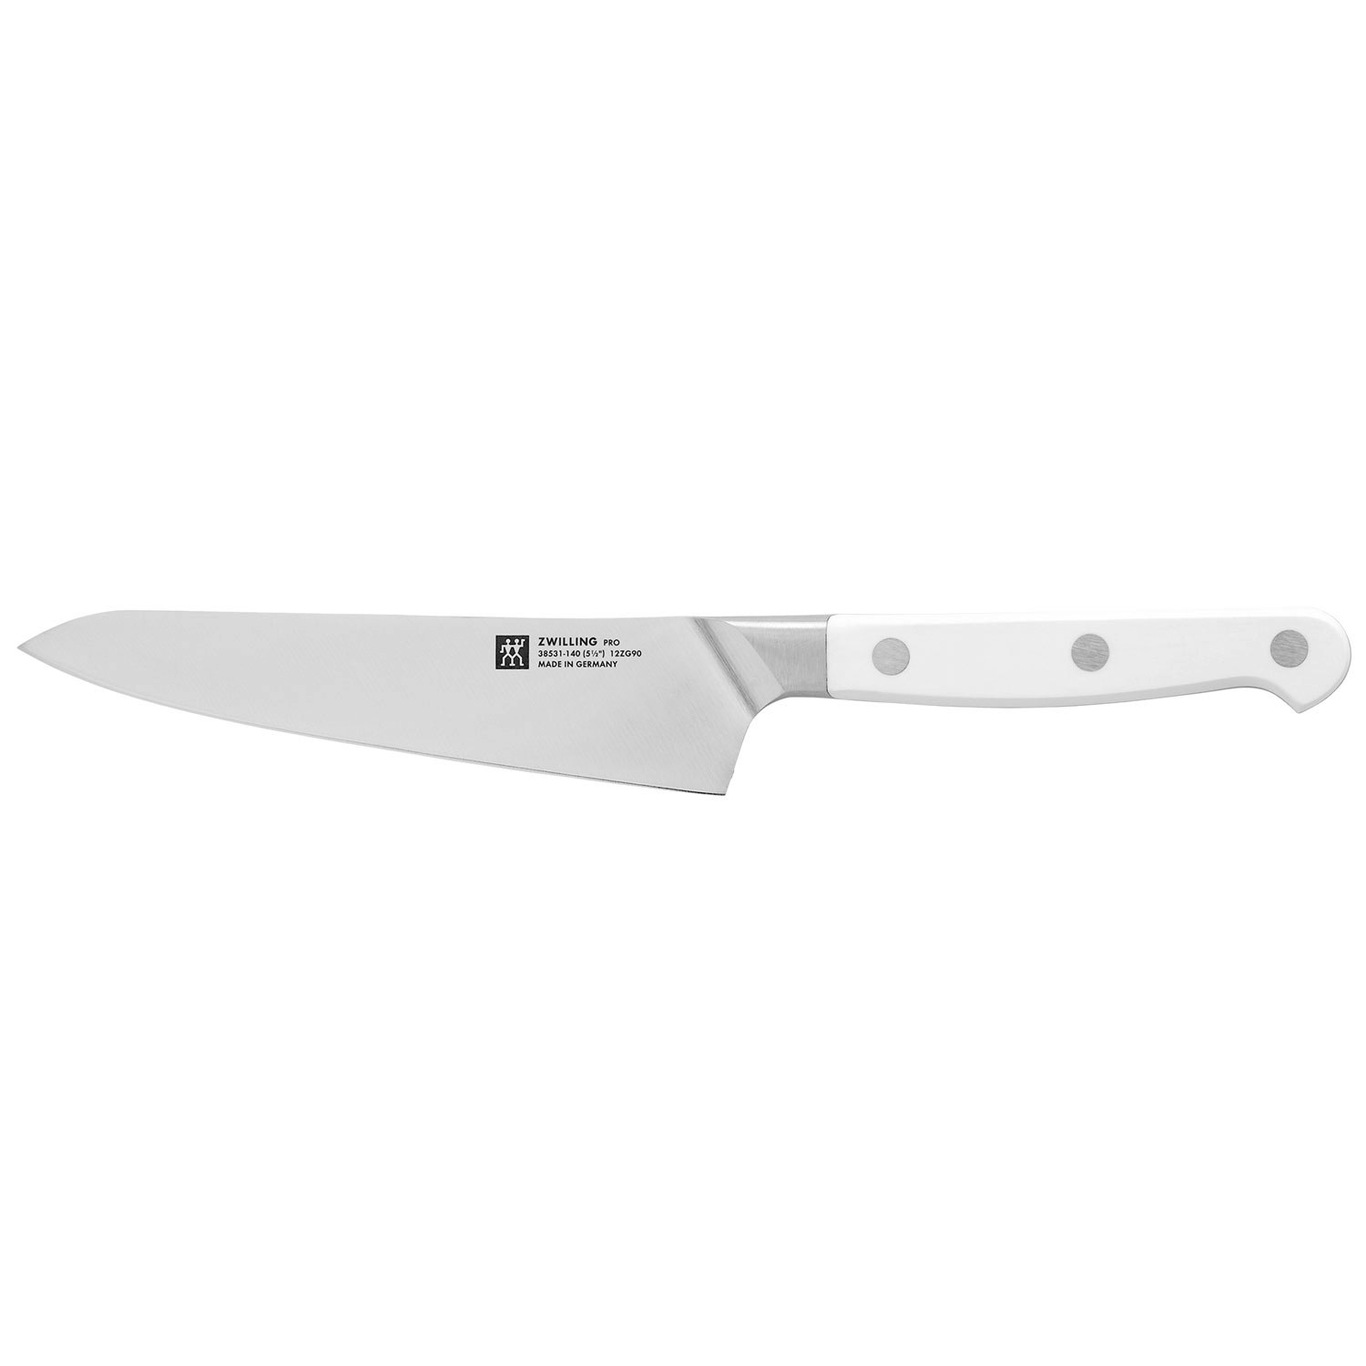 https://royaldesign.com/image/2/zwilling-pro-le-blanc-compact-chef-knife-14-cm-0?w=800&quality=80